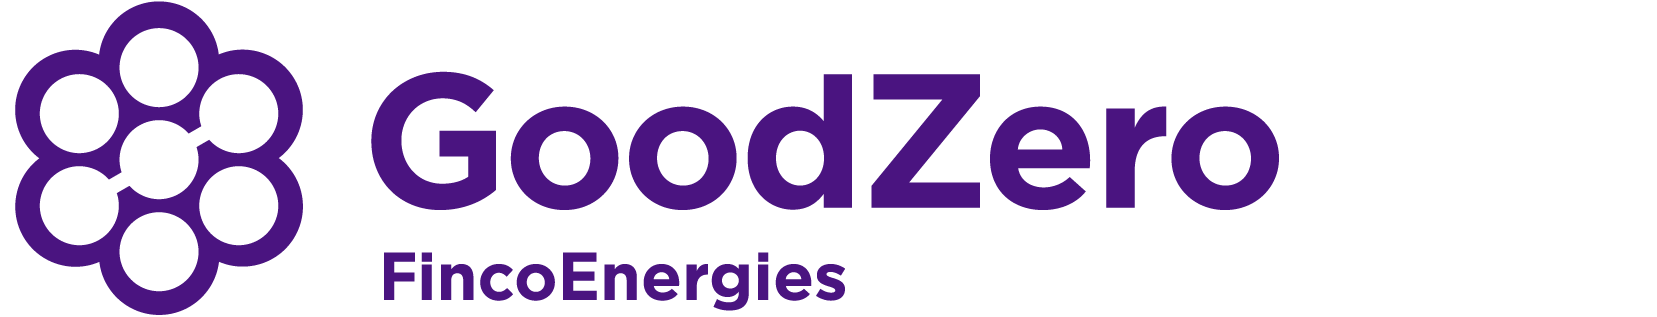  GZ Logo RGB-1